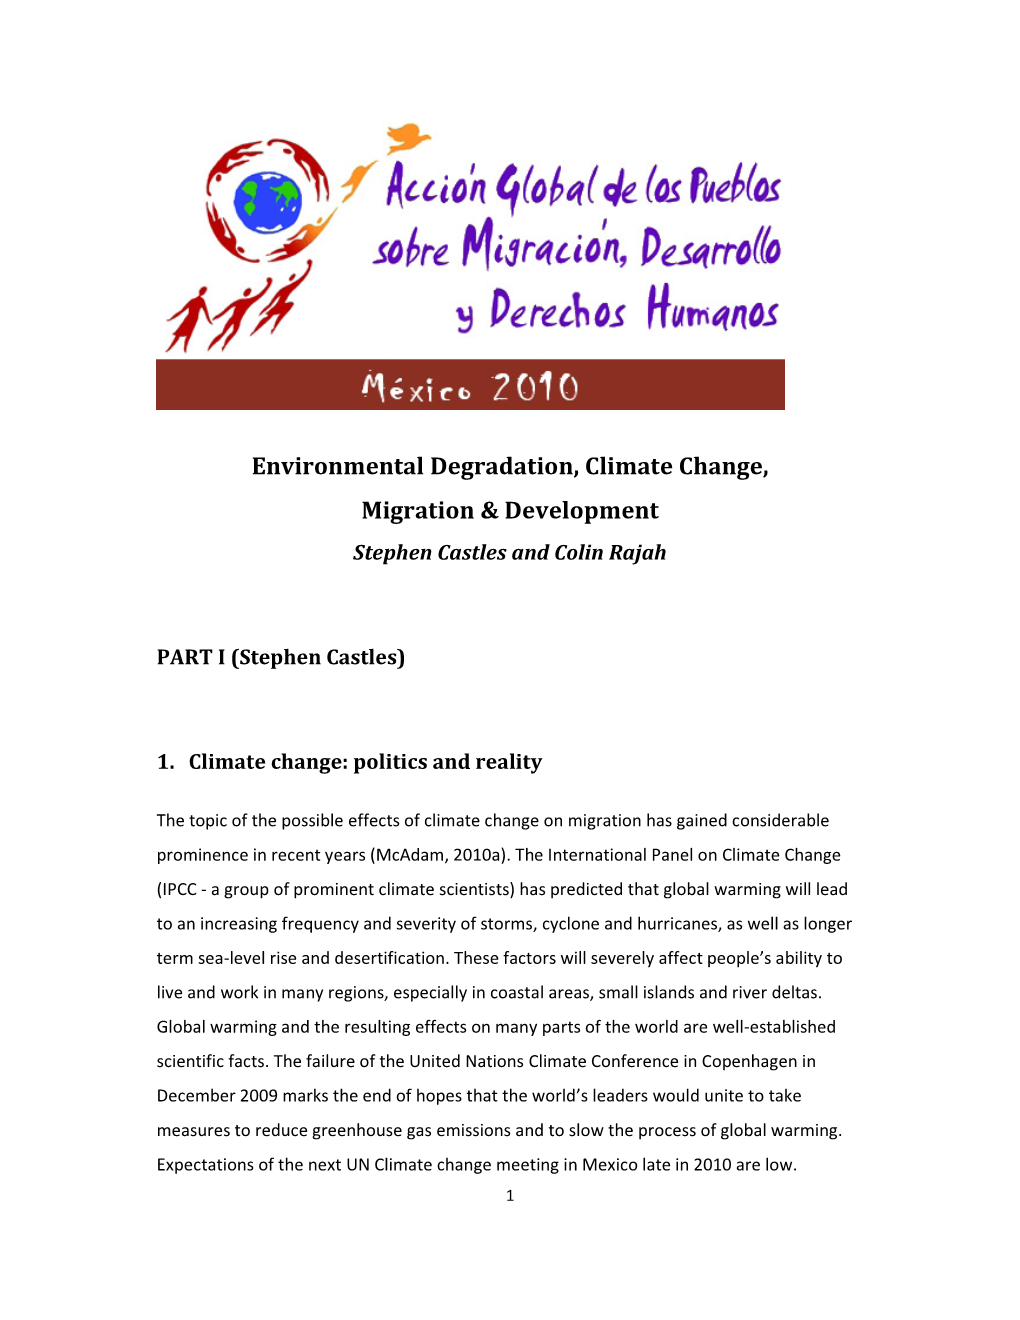 Environmental Degradation, Climate Change, Migration & Development